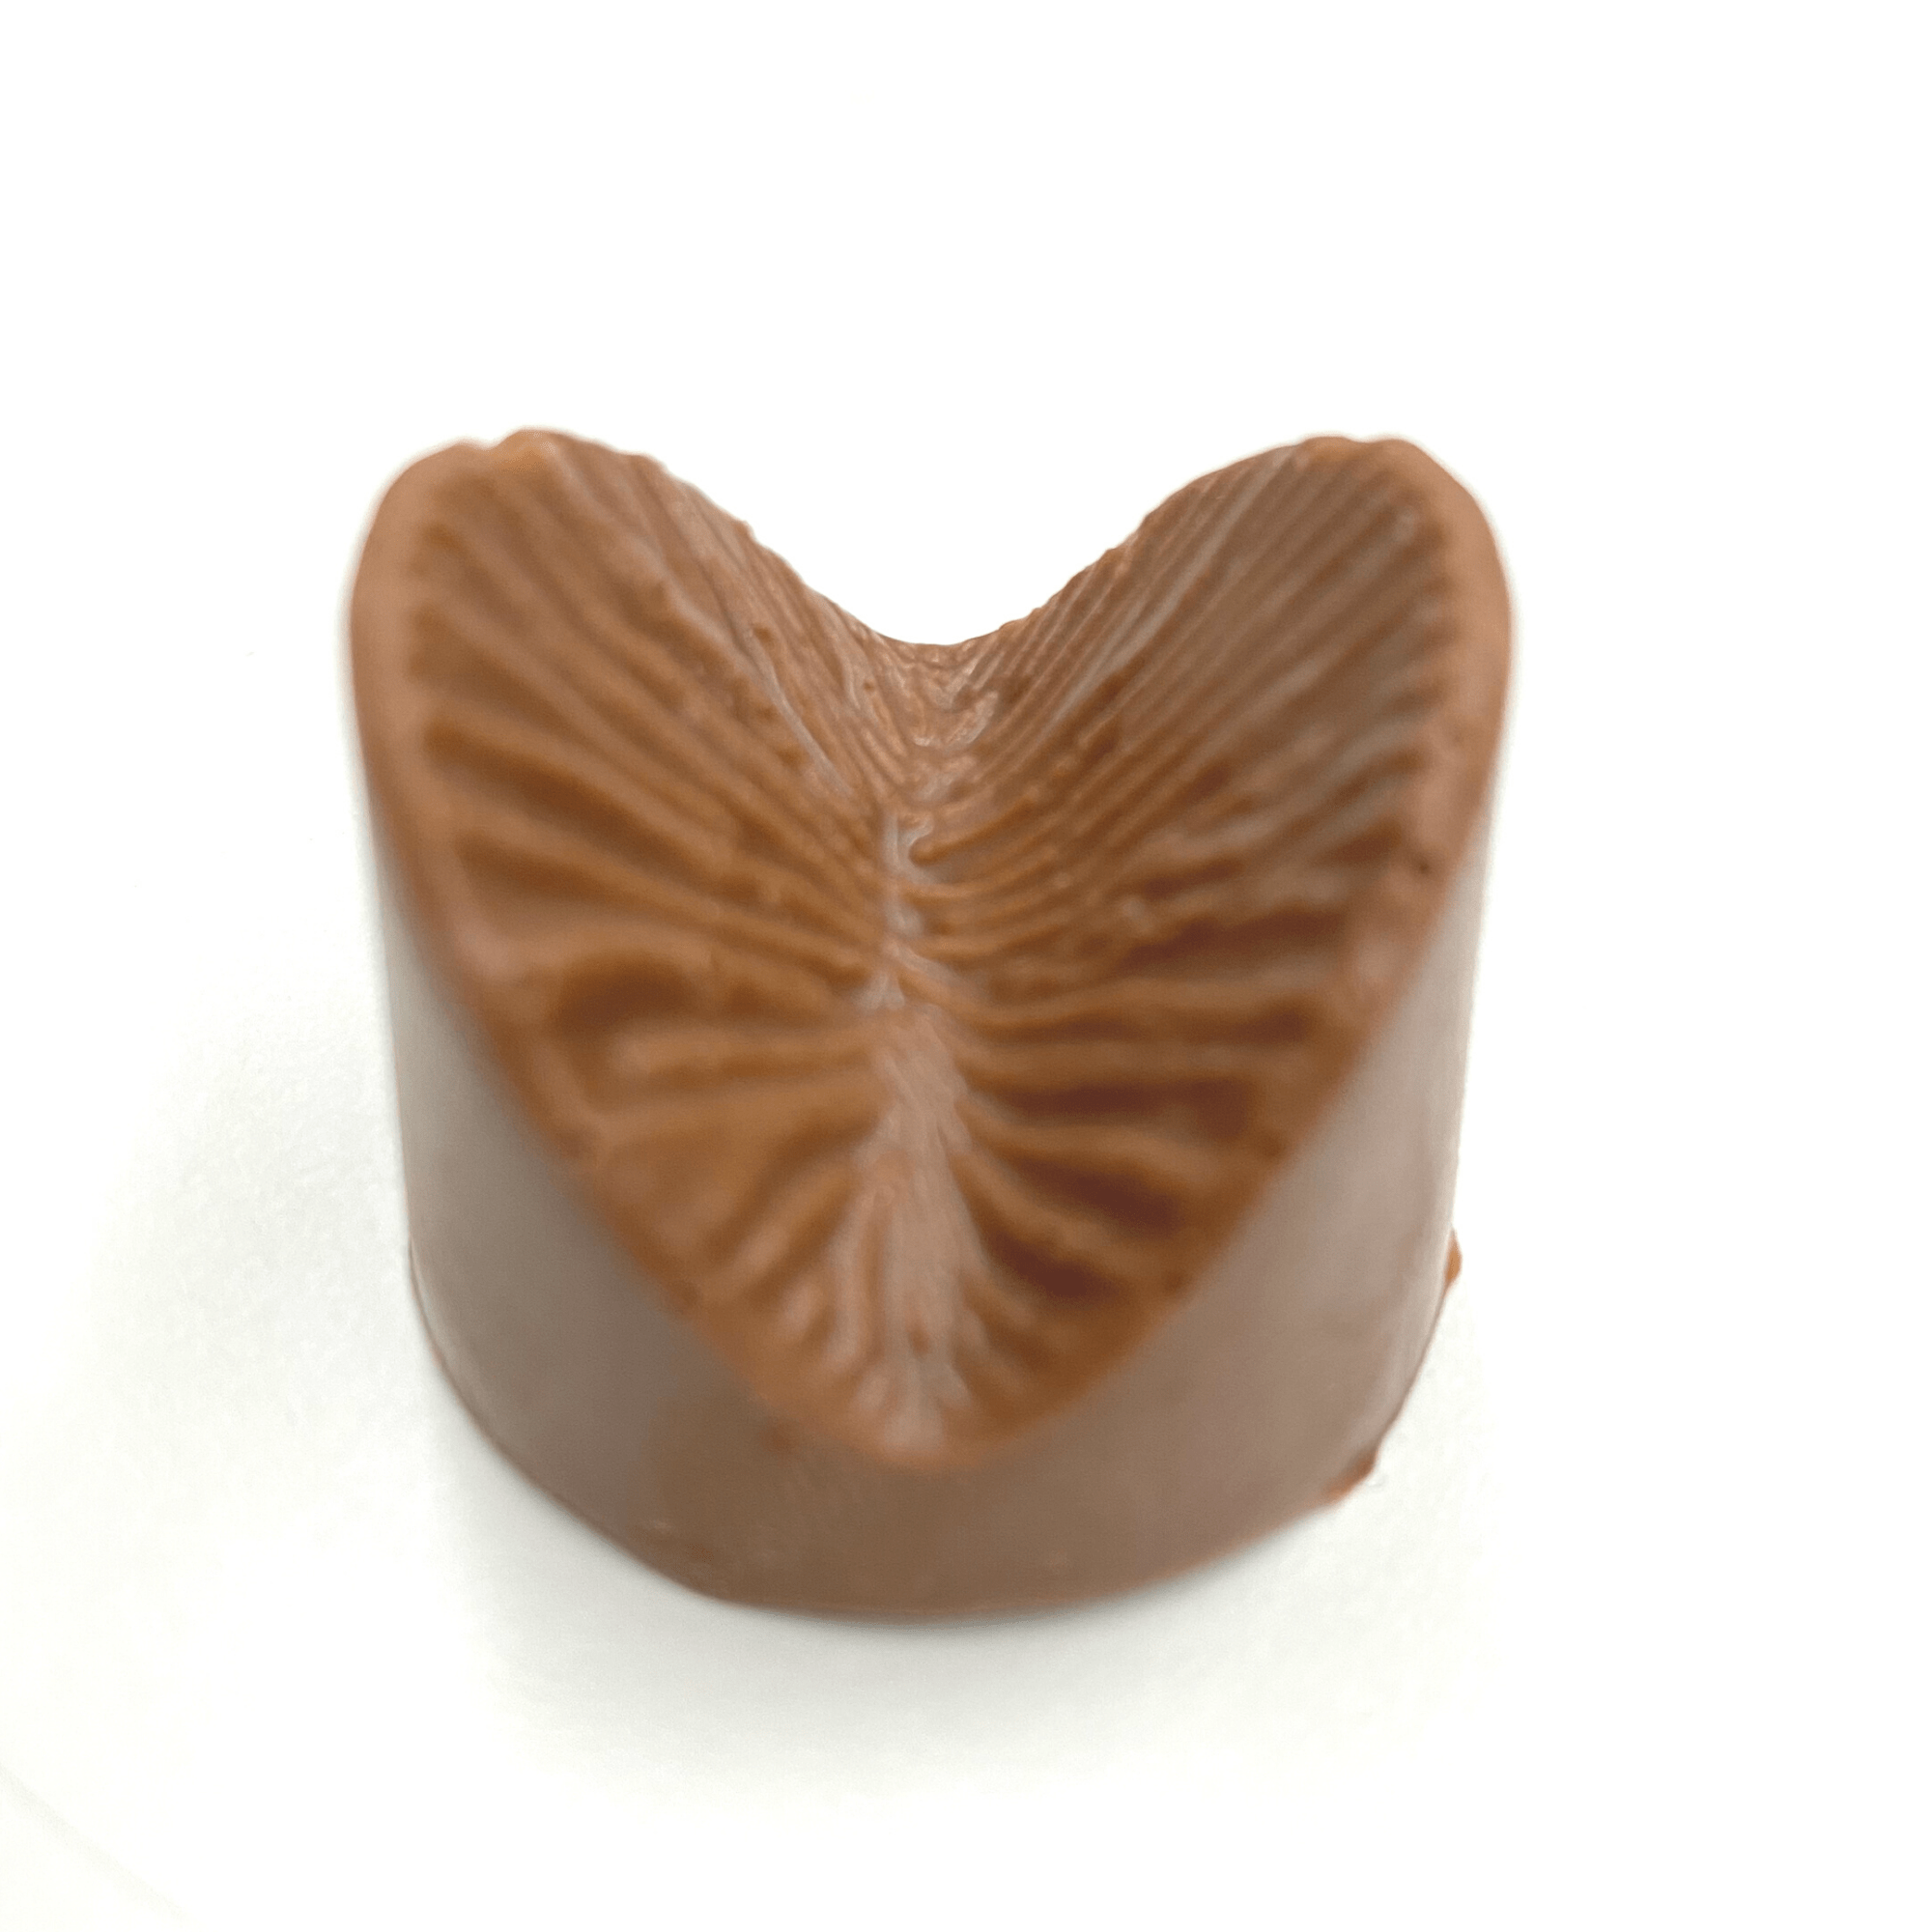 Yummy a Chocolate butthole